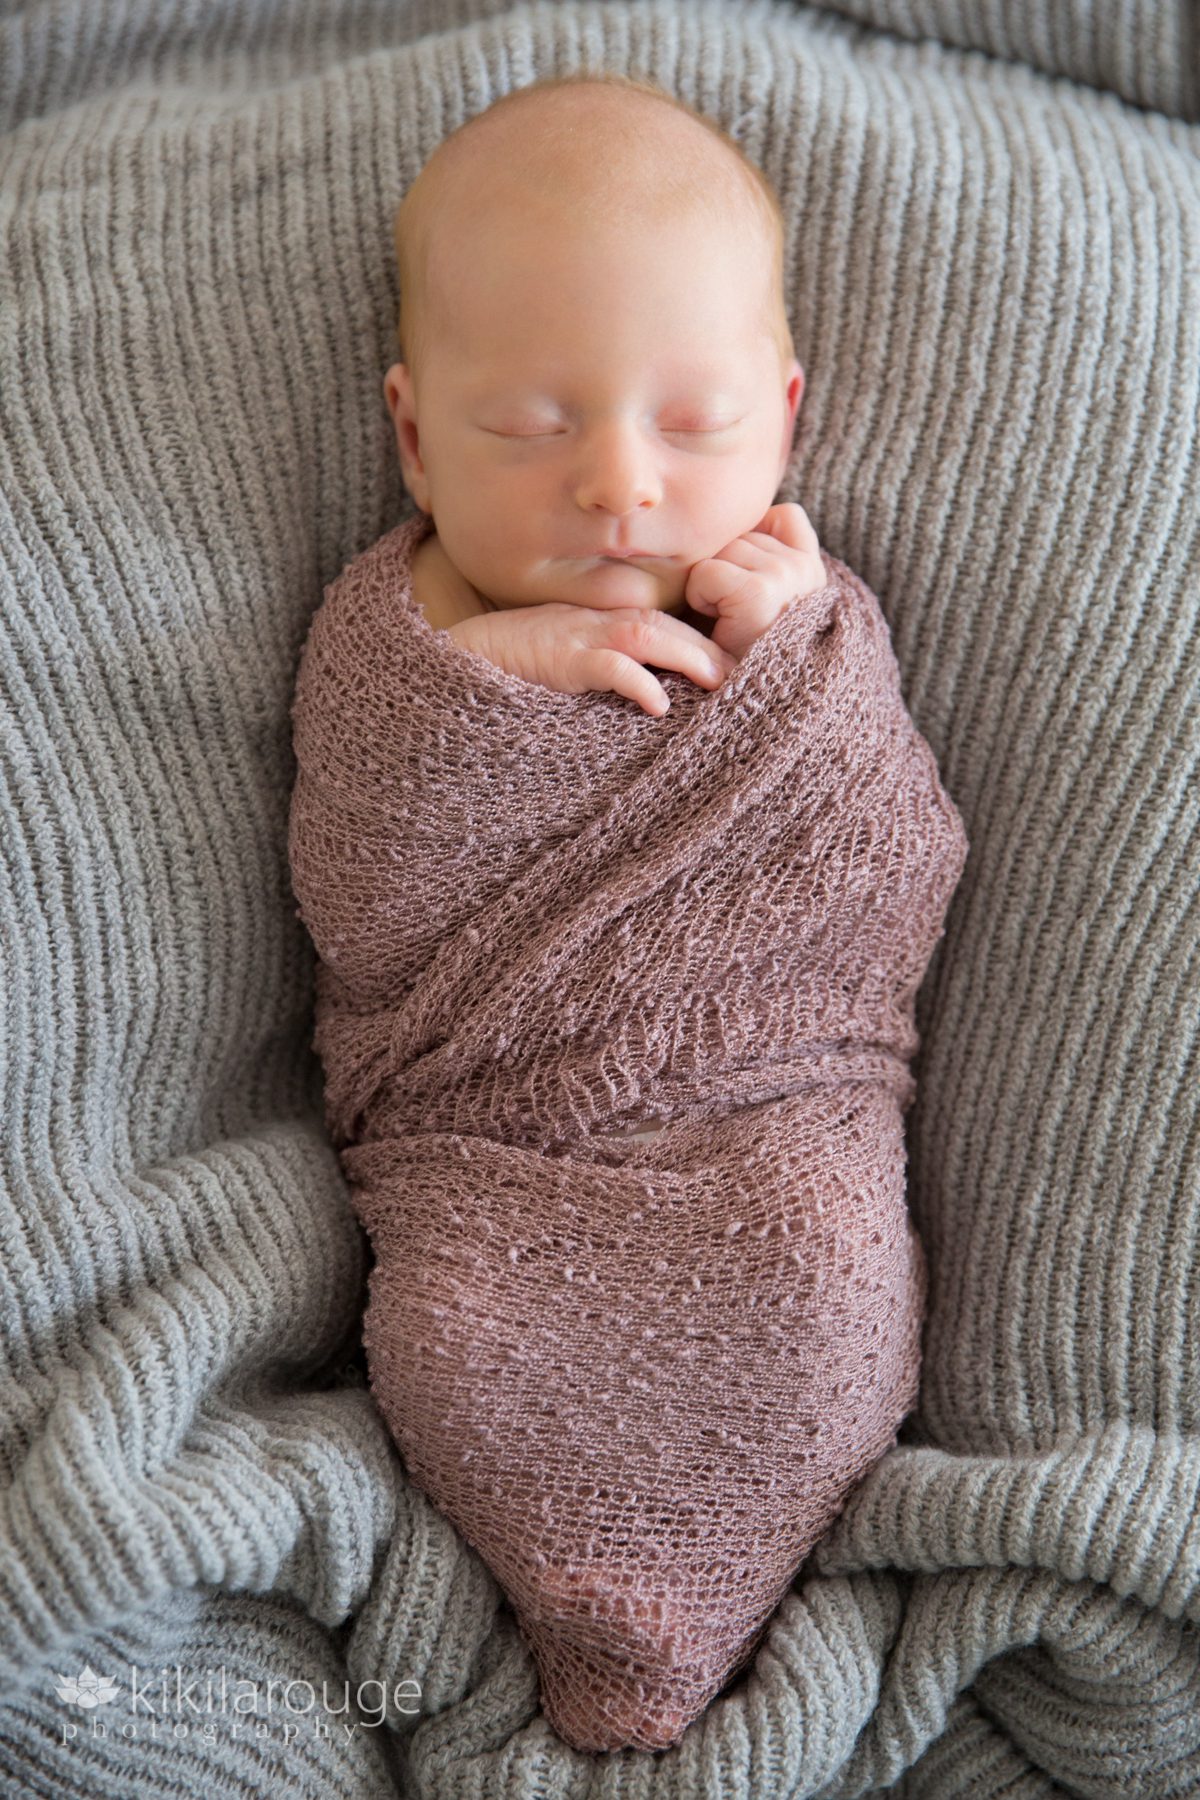 Sleeping newborn baby wrapped in purple wrap on gray blanket